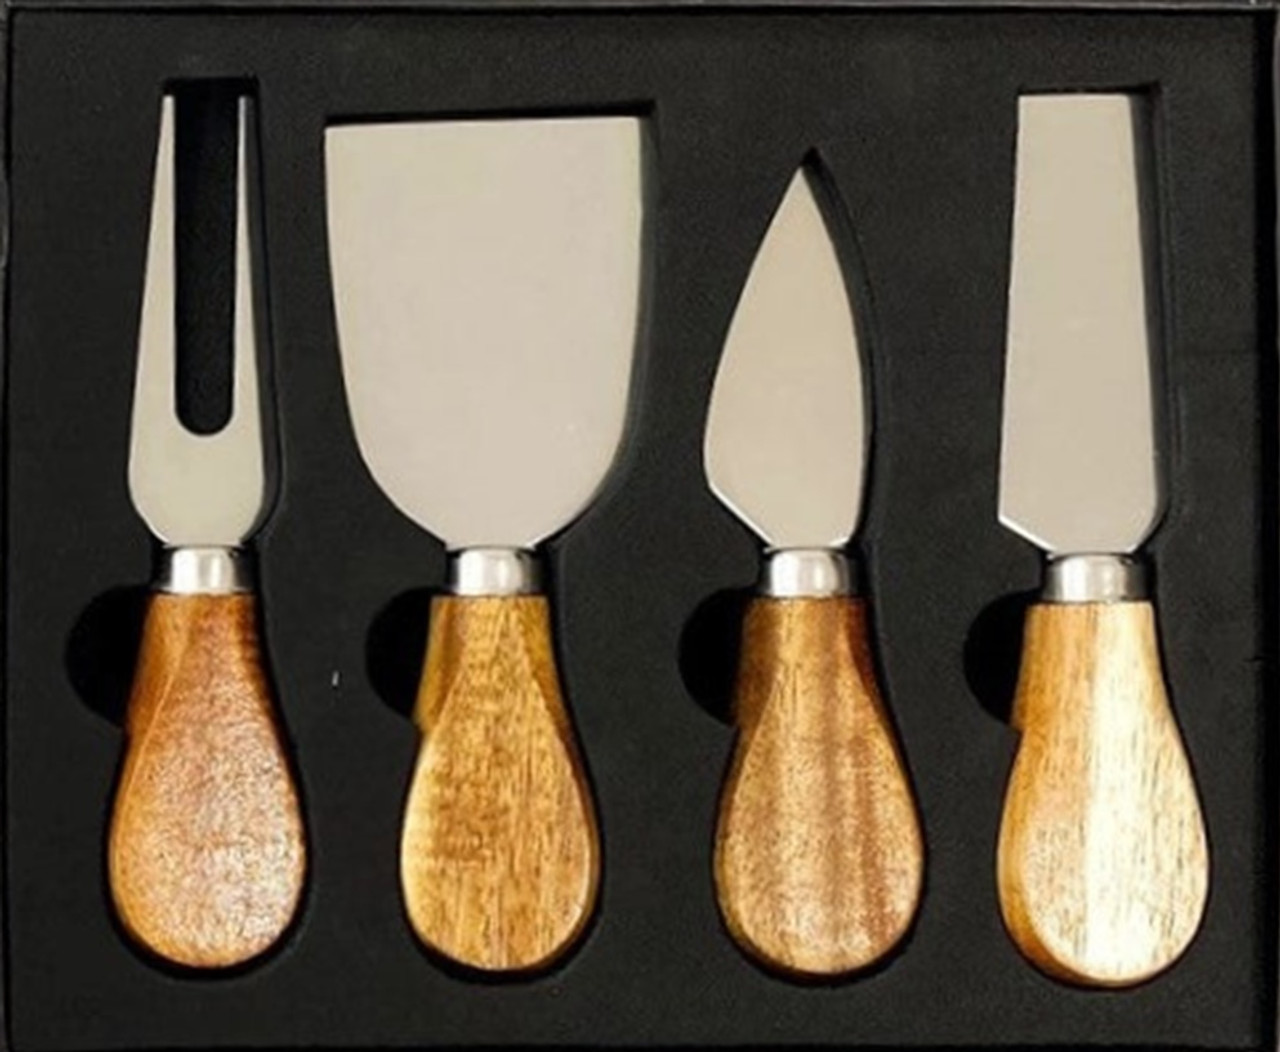 Cheese Board Knife Set, Acacia Handles (Optional Add On)
Acacia Cheese Board - Large - Navy|White|Metallic (ACB-1020-NWM)